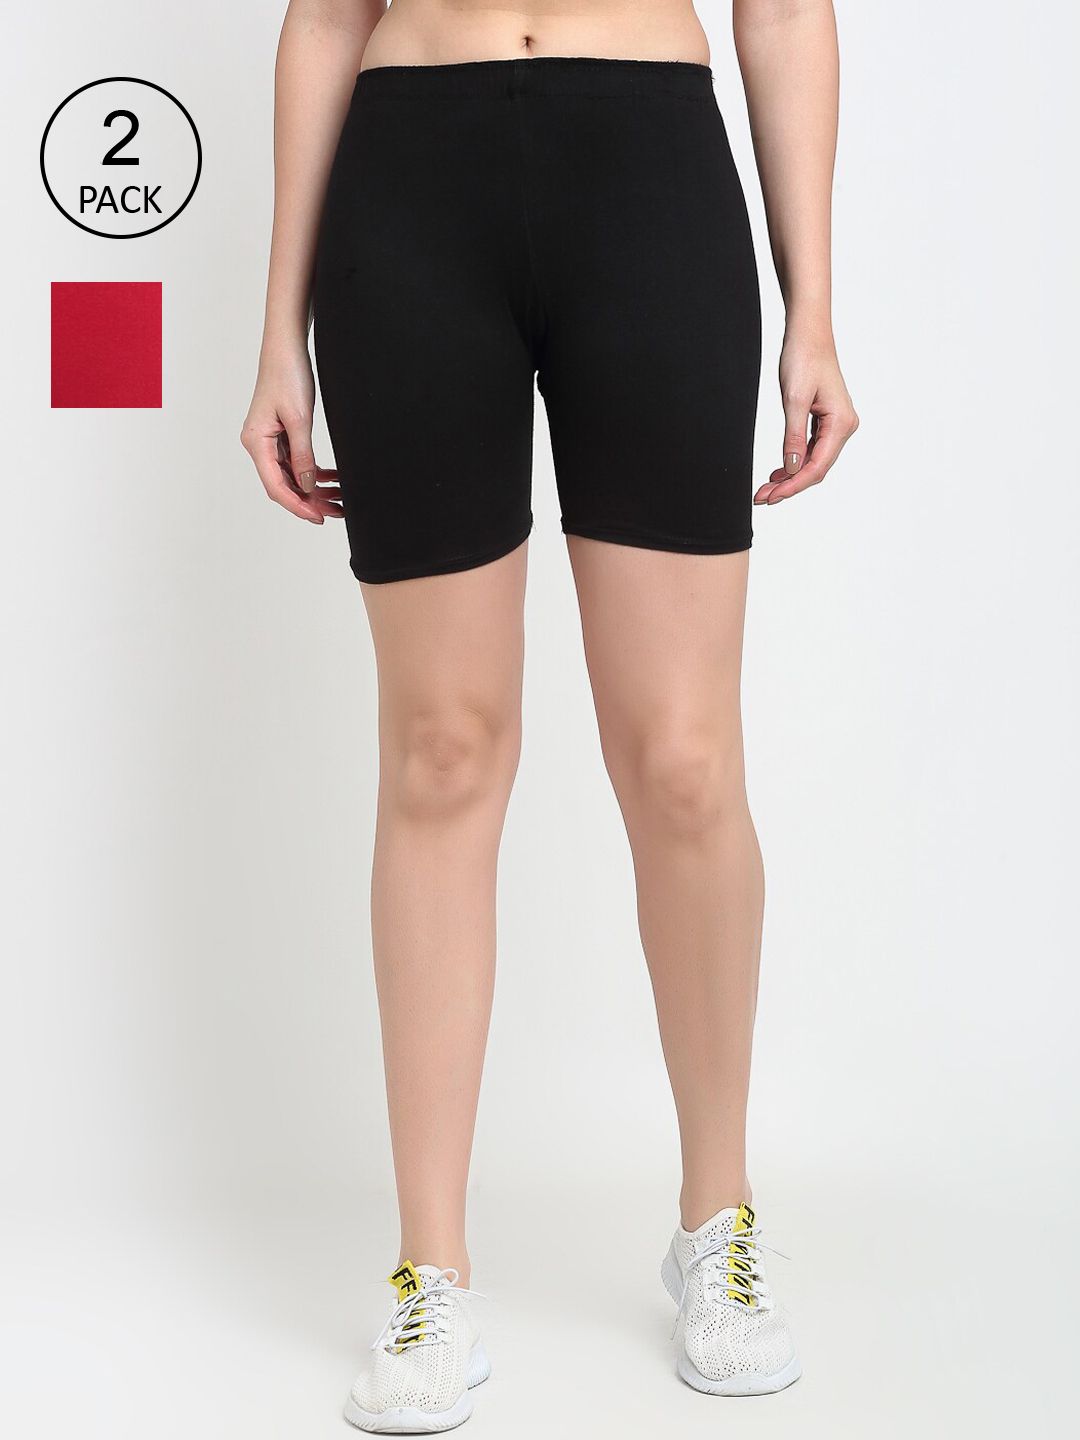 GRACIT Women Pack of 2 Black & Maroon Biker Shorts Price in India